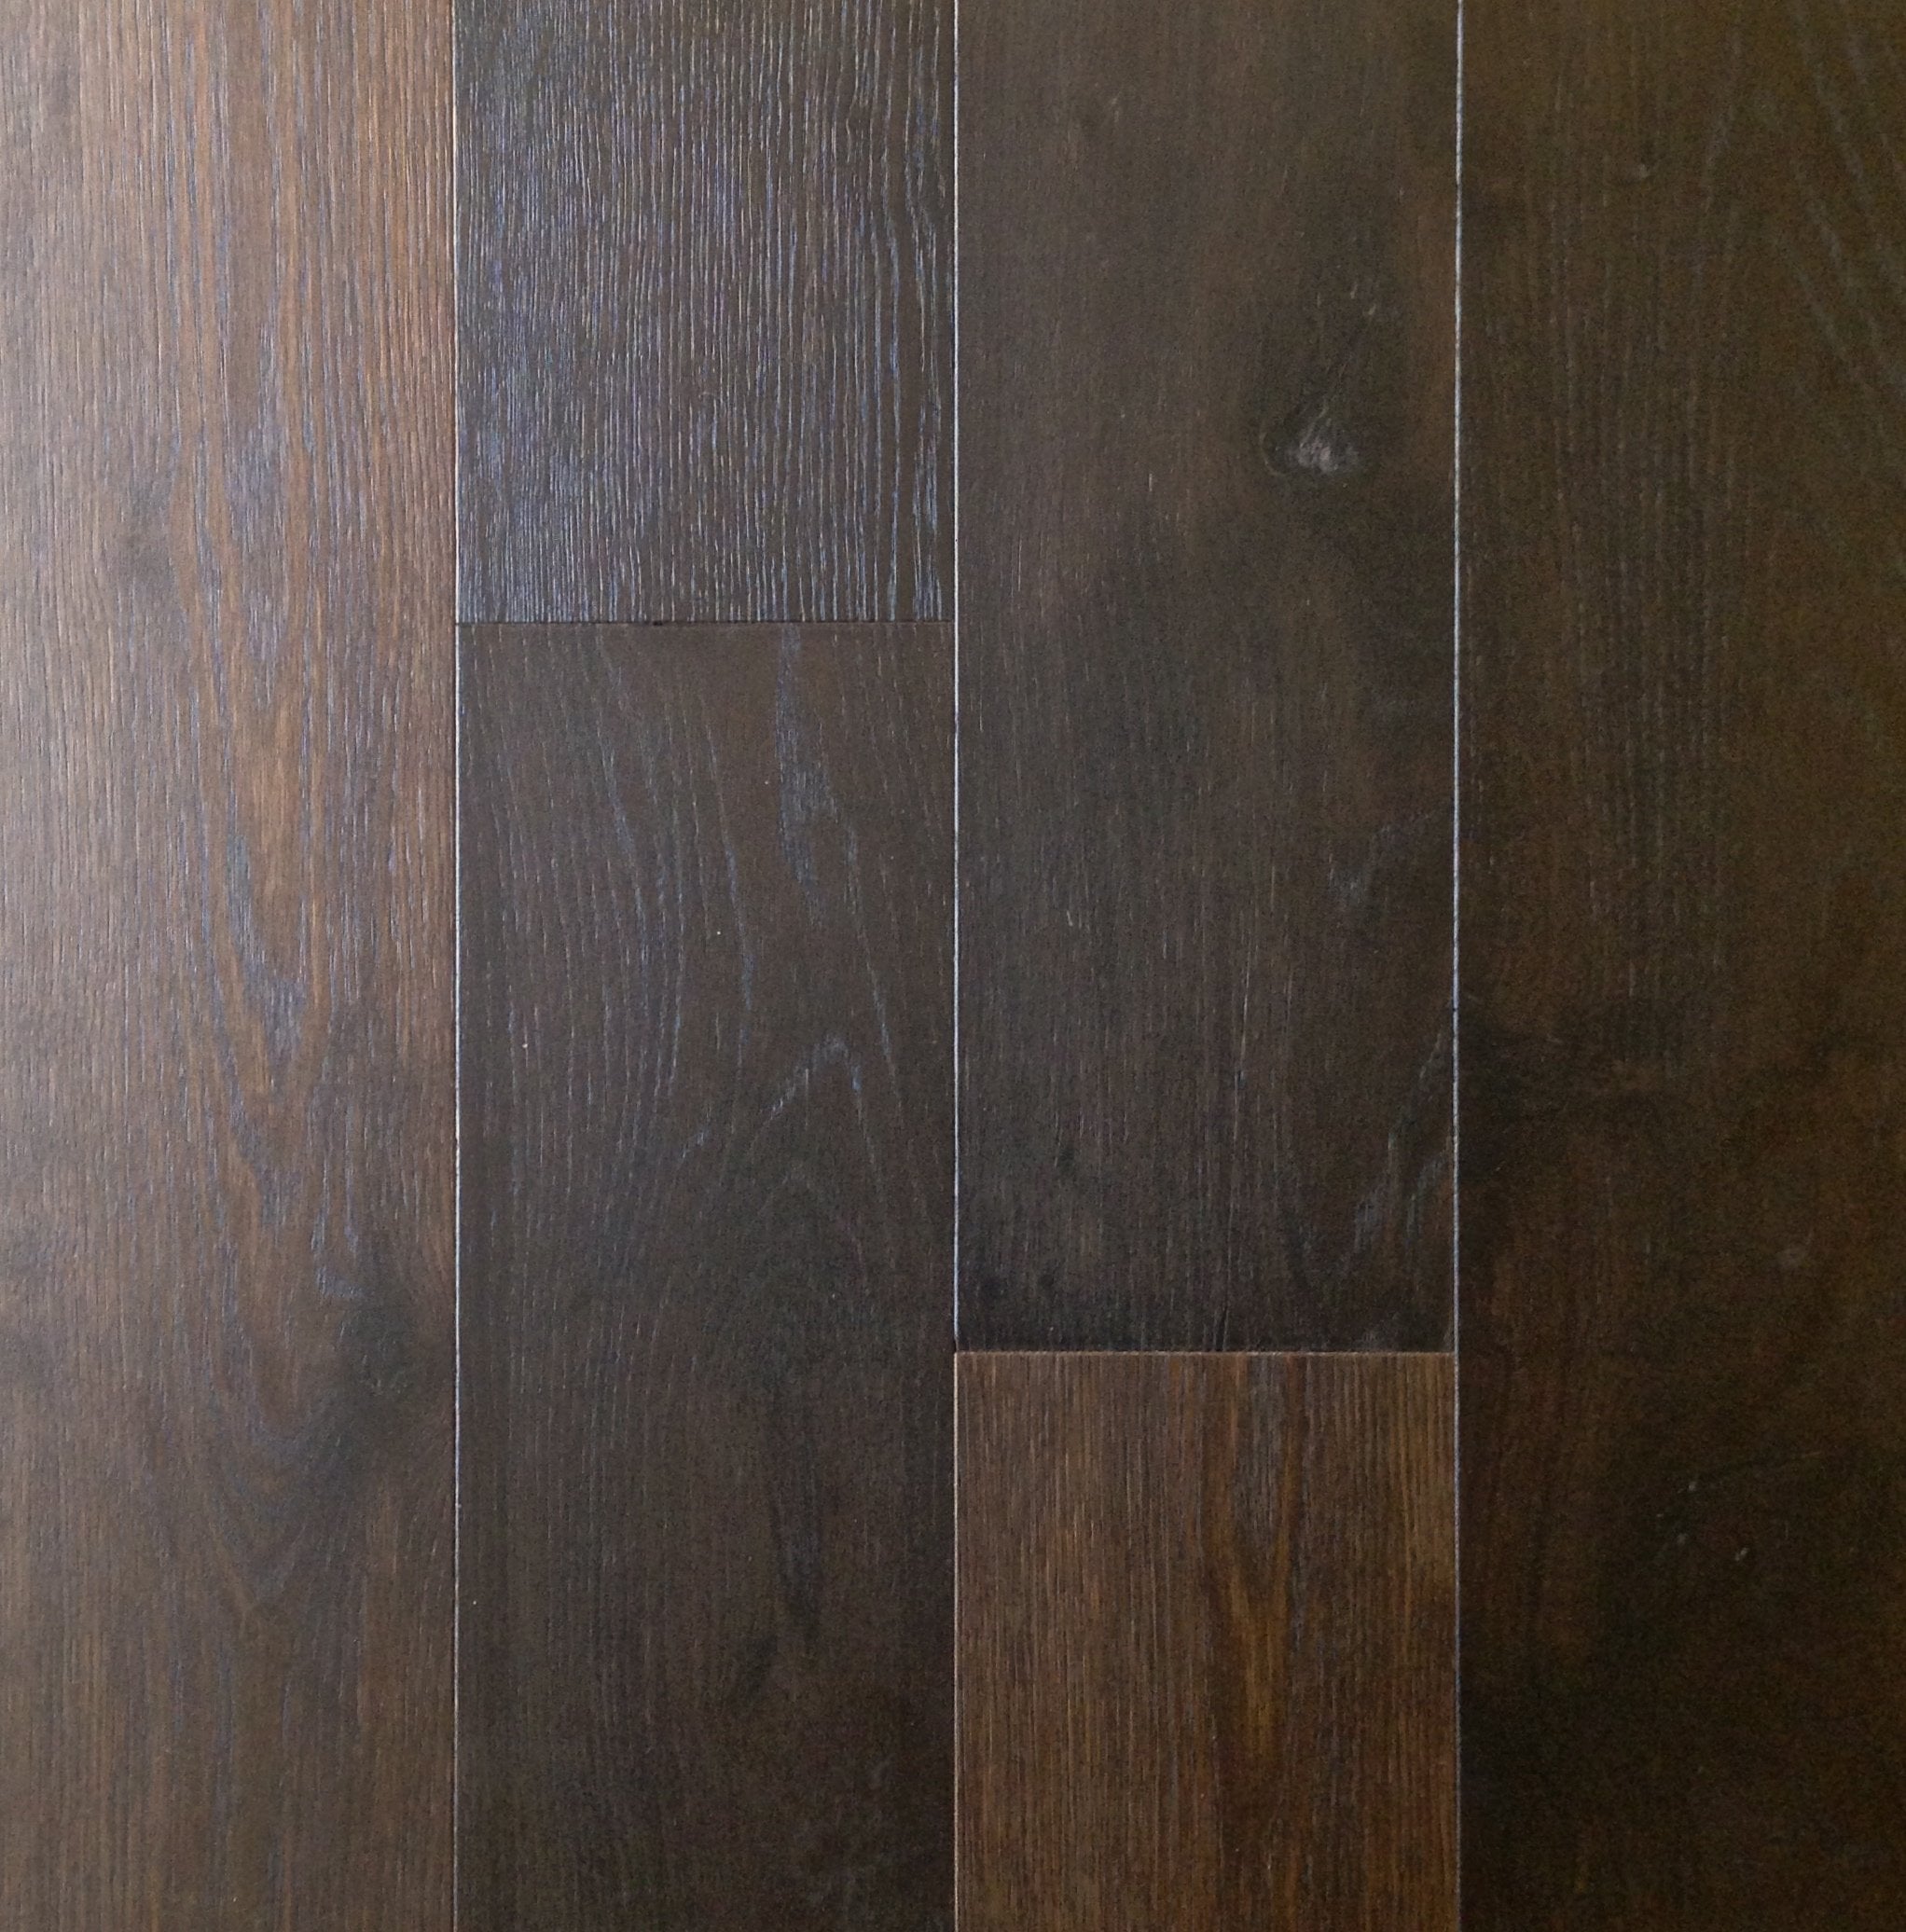 teka antique noir german french white oak natural hardwood flooring plank fumed smoke distributed by surface group international